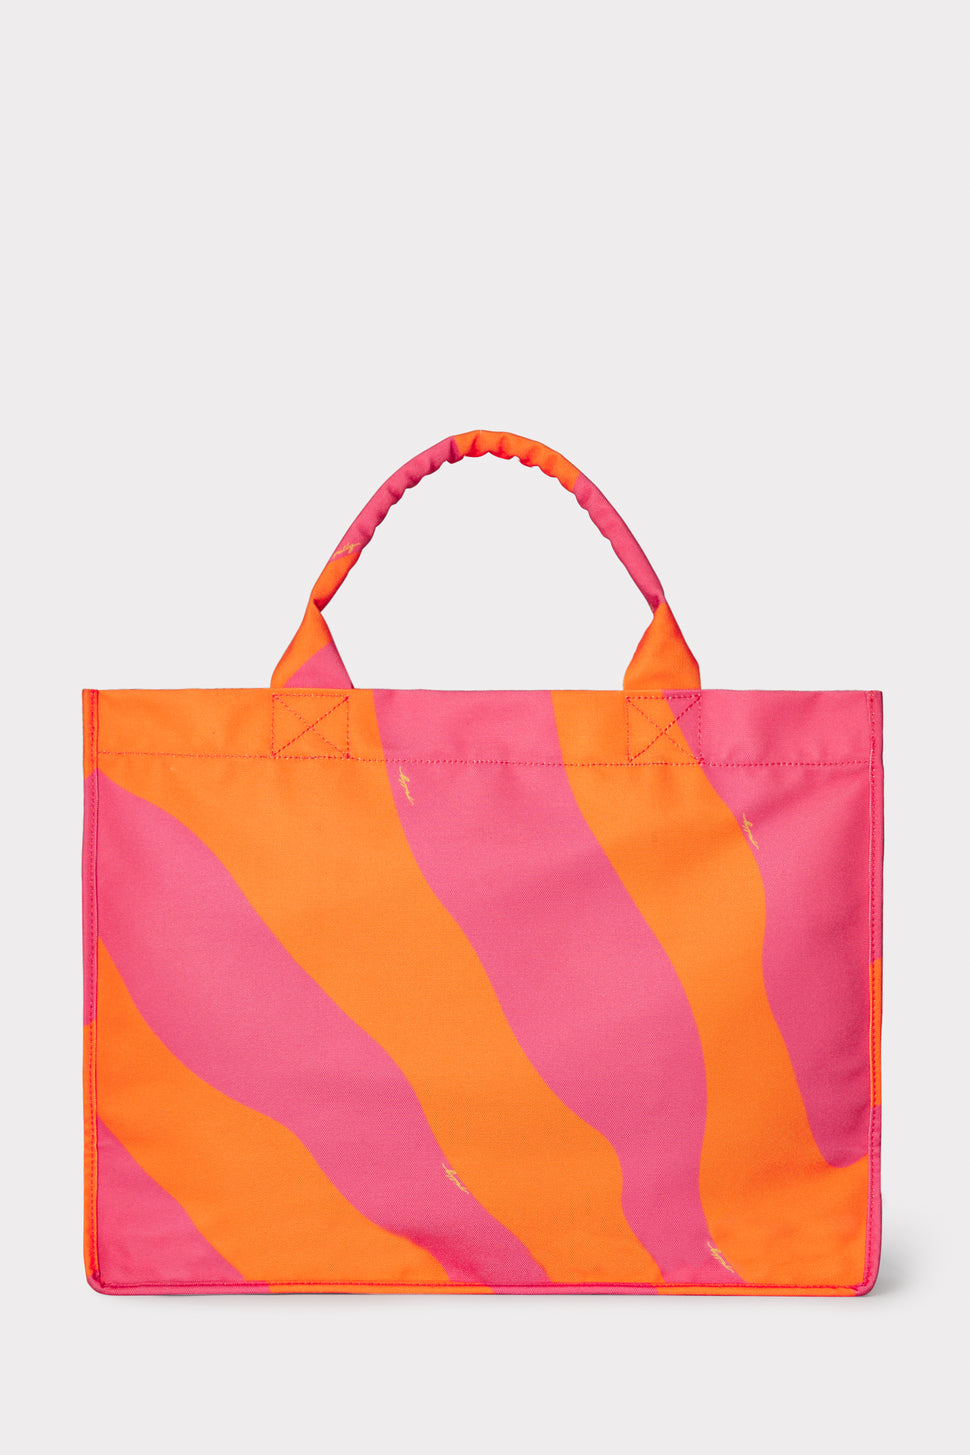  Victoria's Secret Love Pink Stripe Weekender Tote Bag (Pink  Stripe Love) : Clothing, Shoes & Jewelry